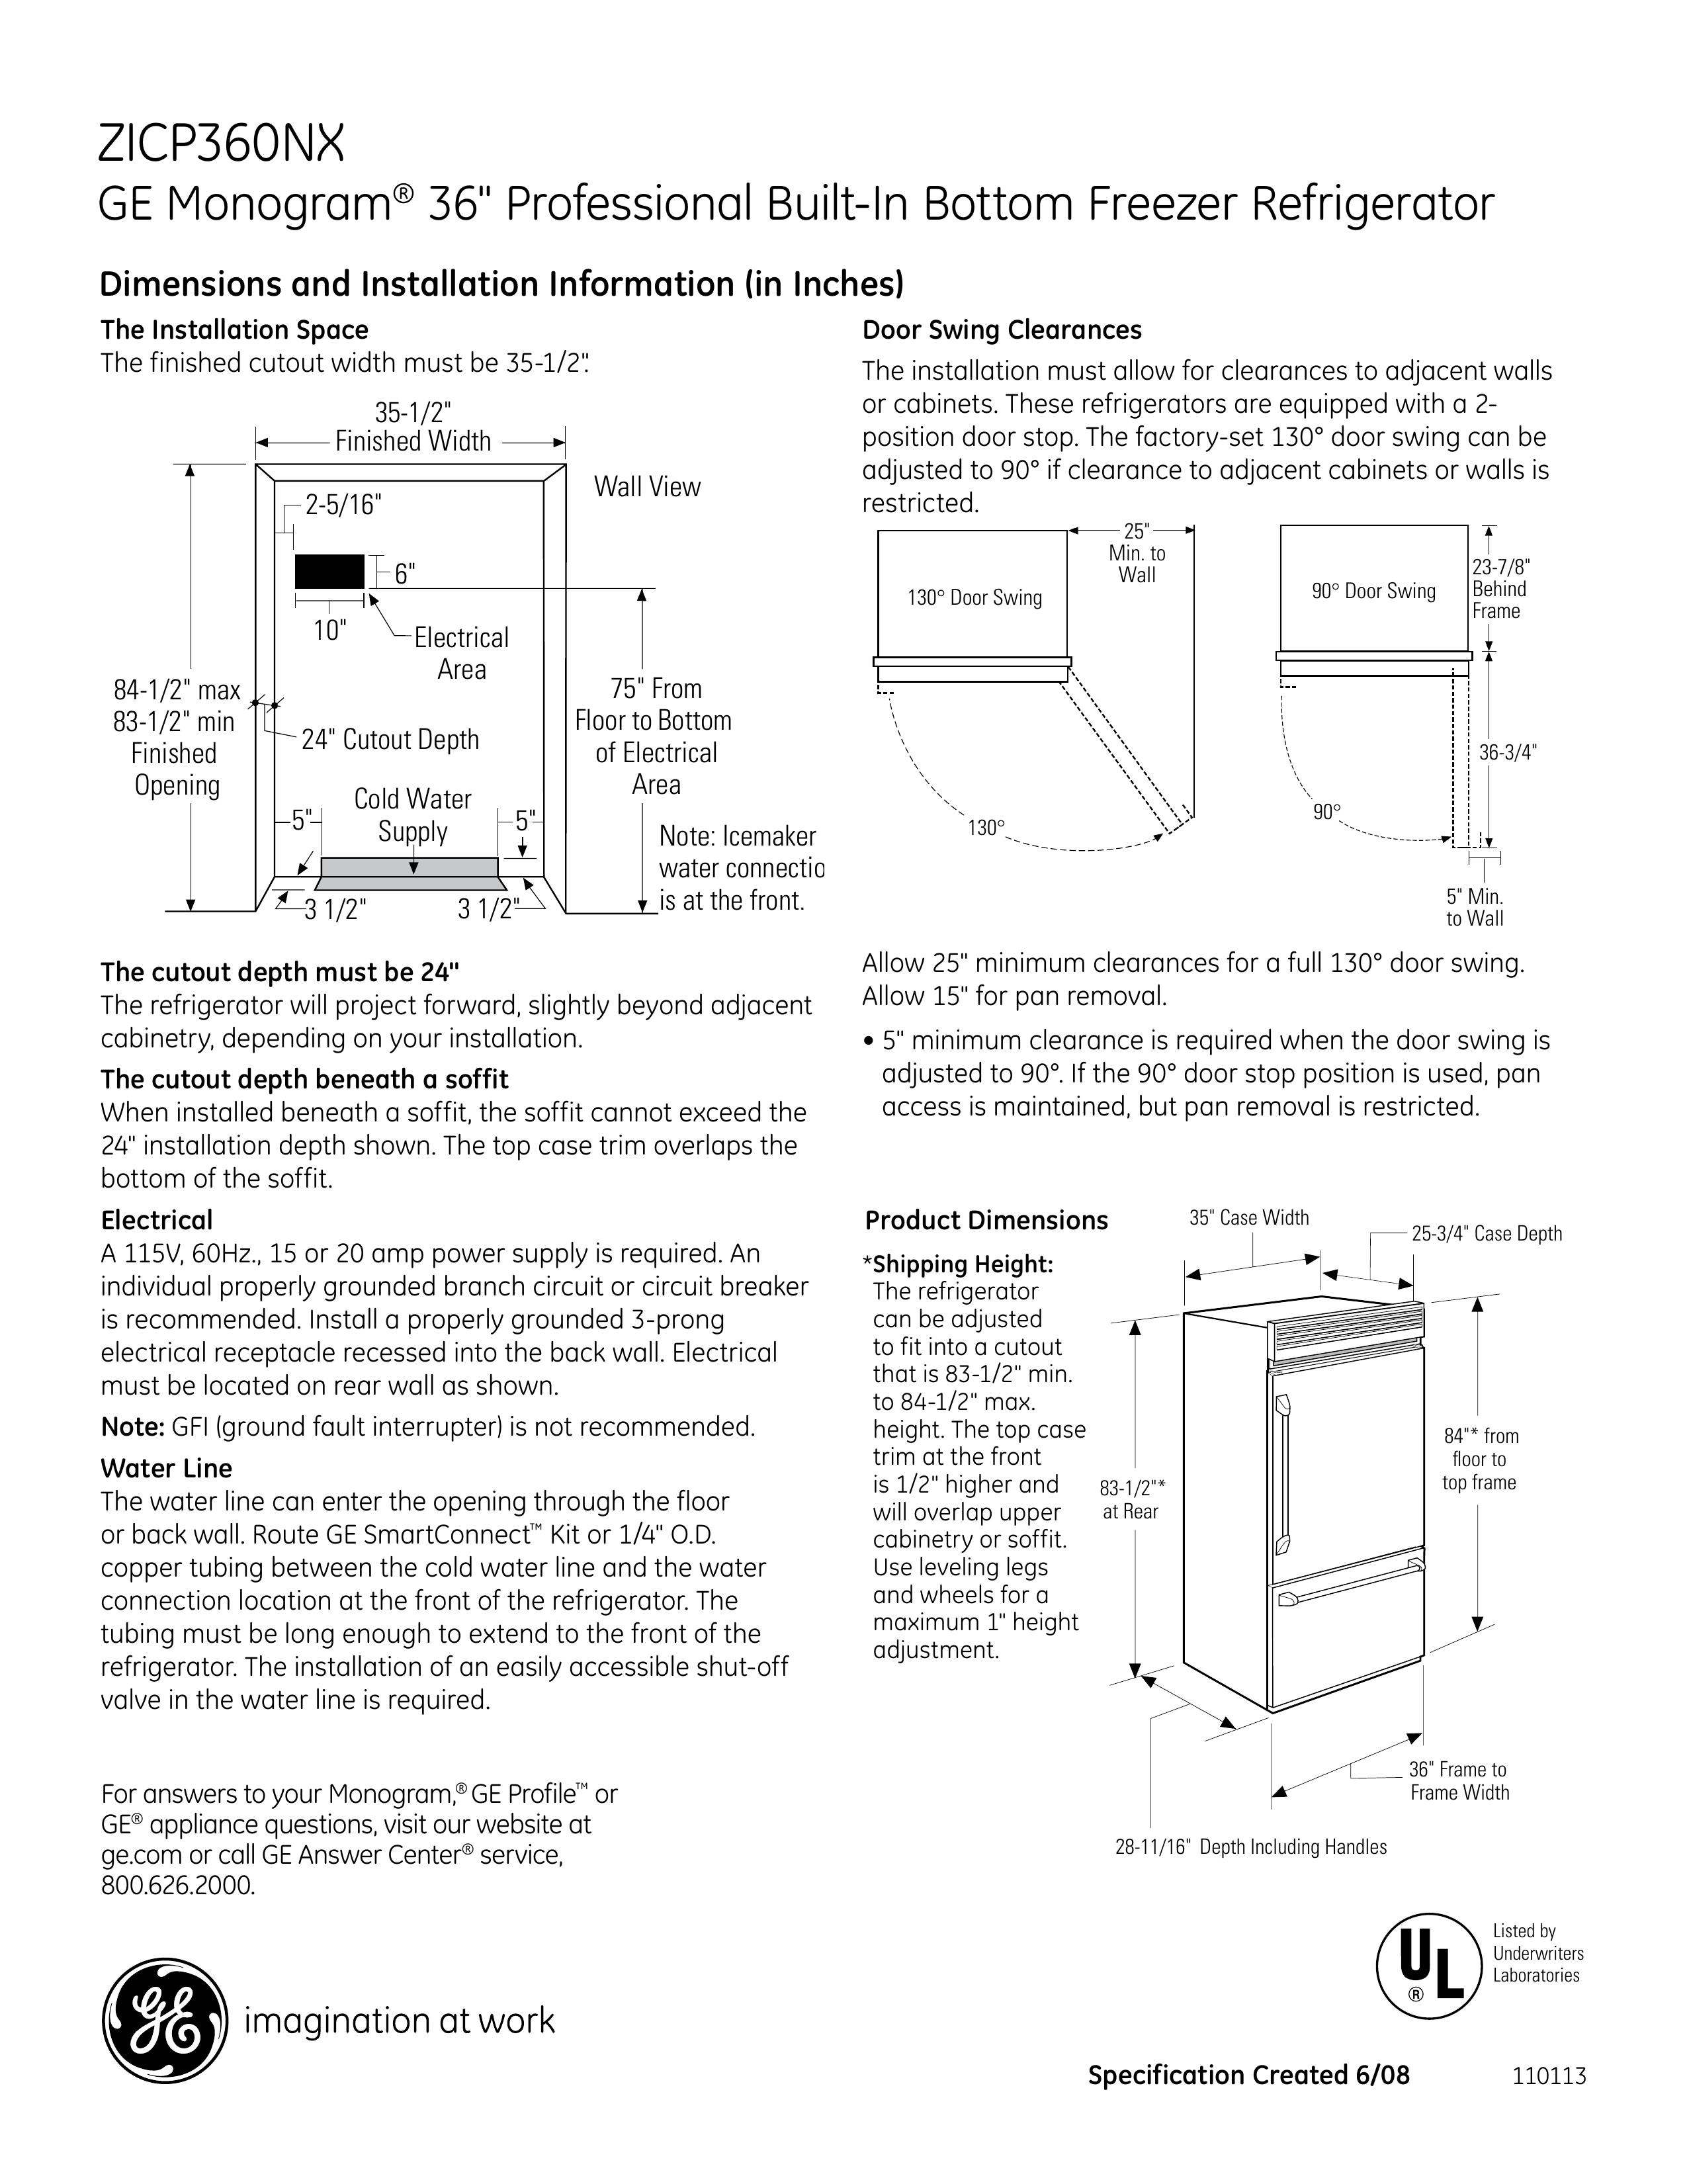 GE Monogram ZICP360NX Refrigerator User Manual